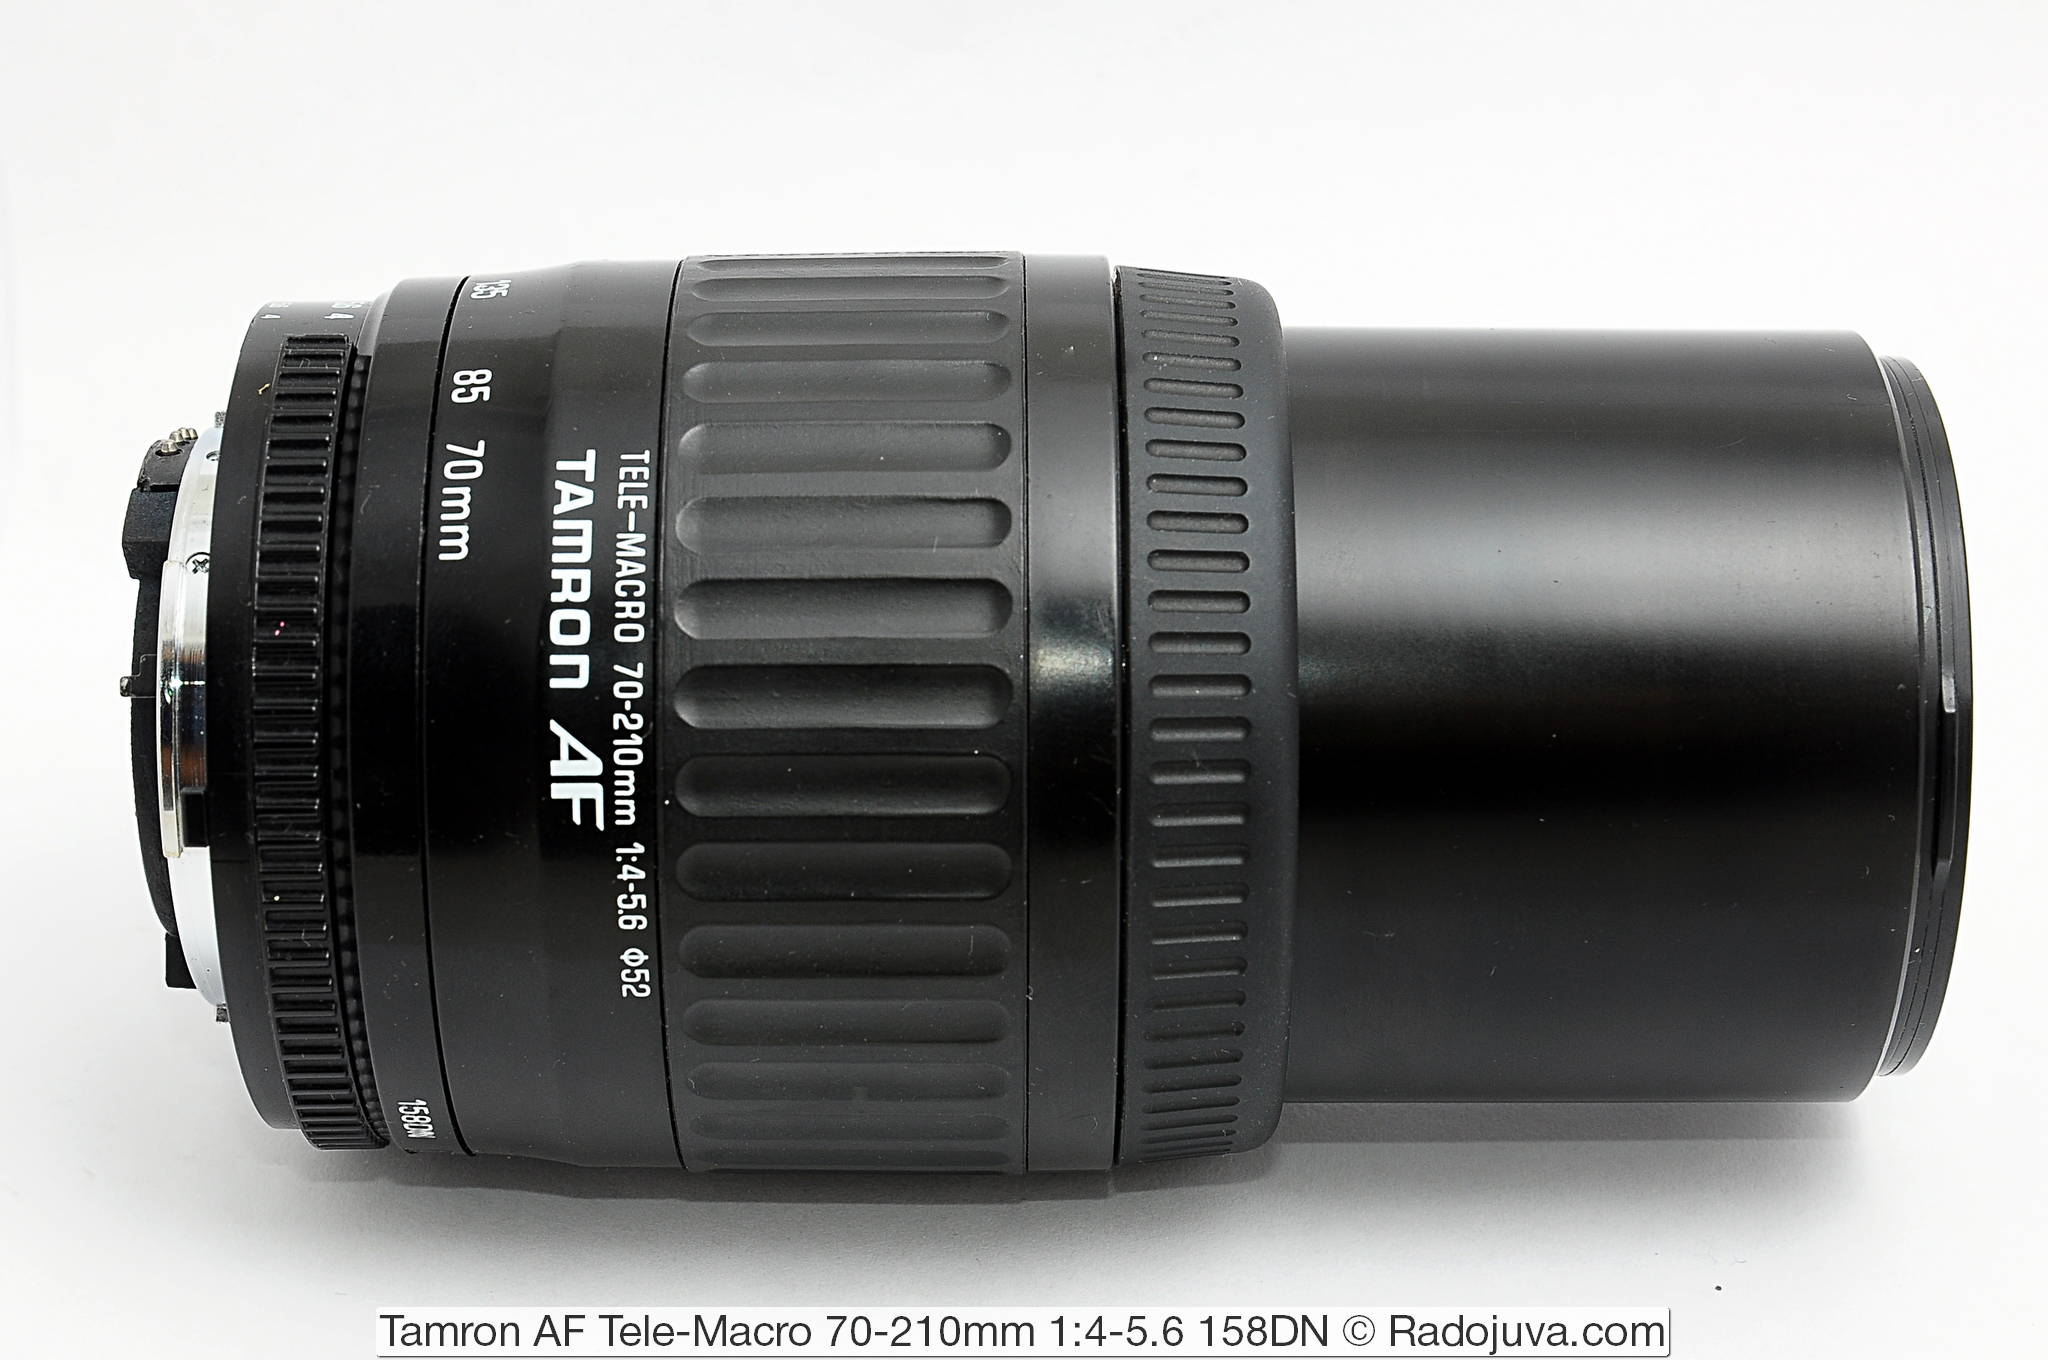  Tamron AF Tele-Macro 70-210mm 1:4-5.6 158DN